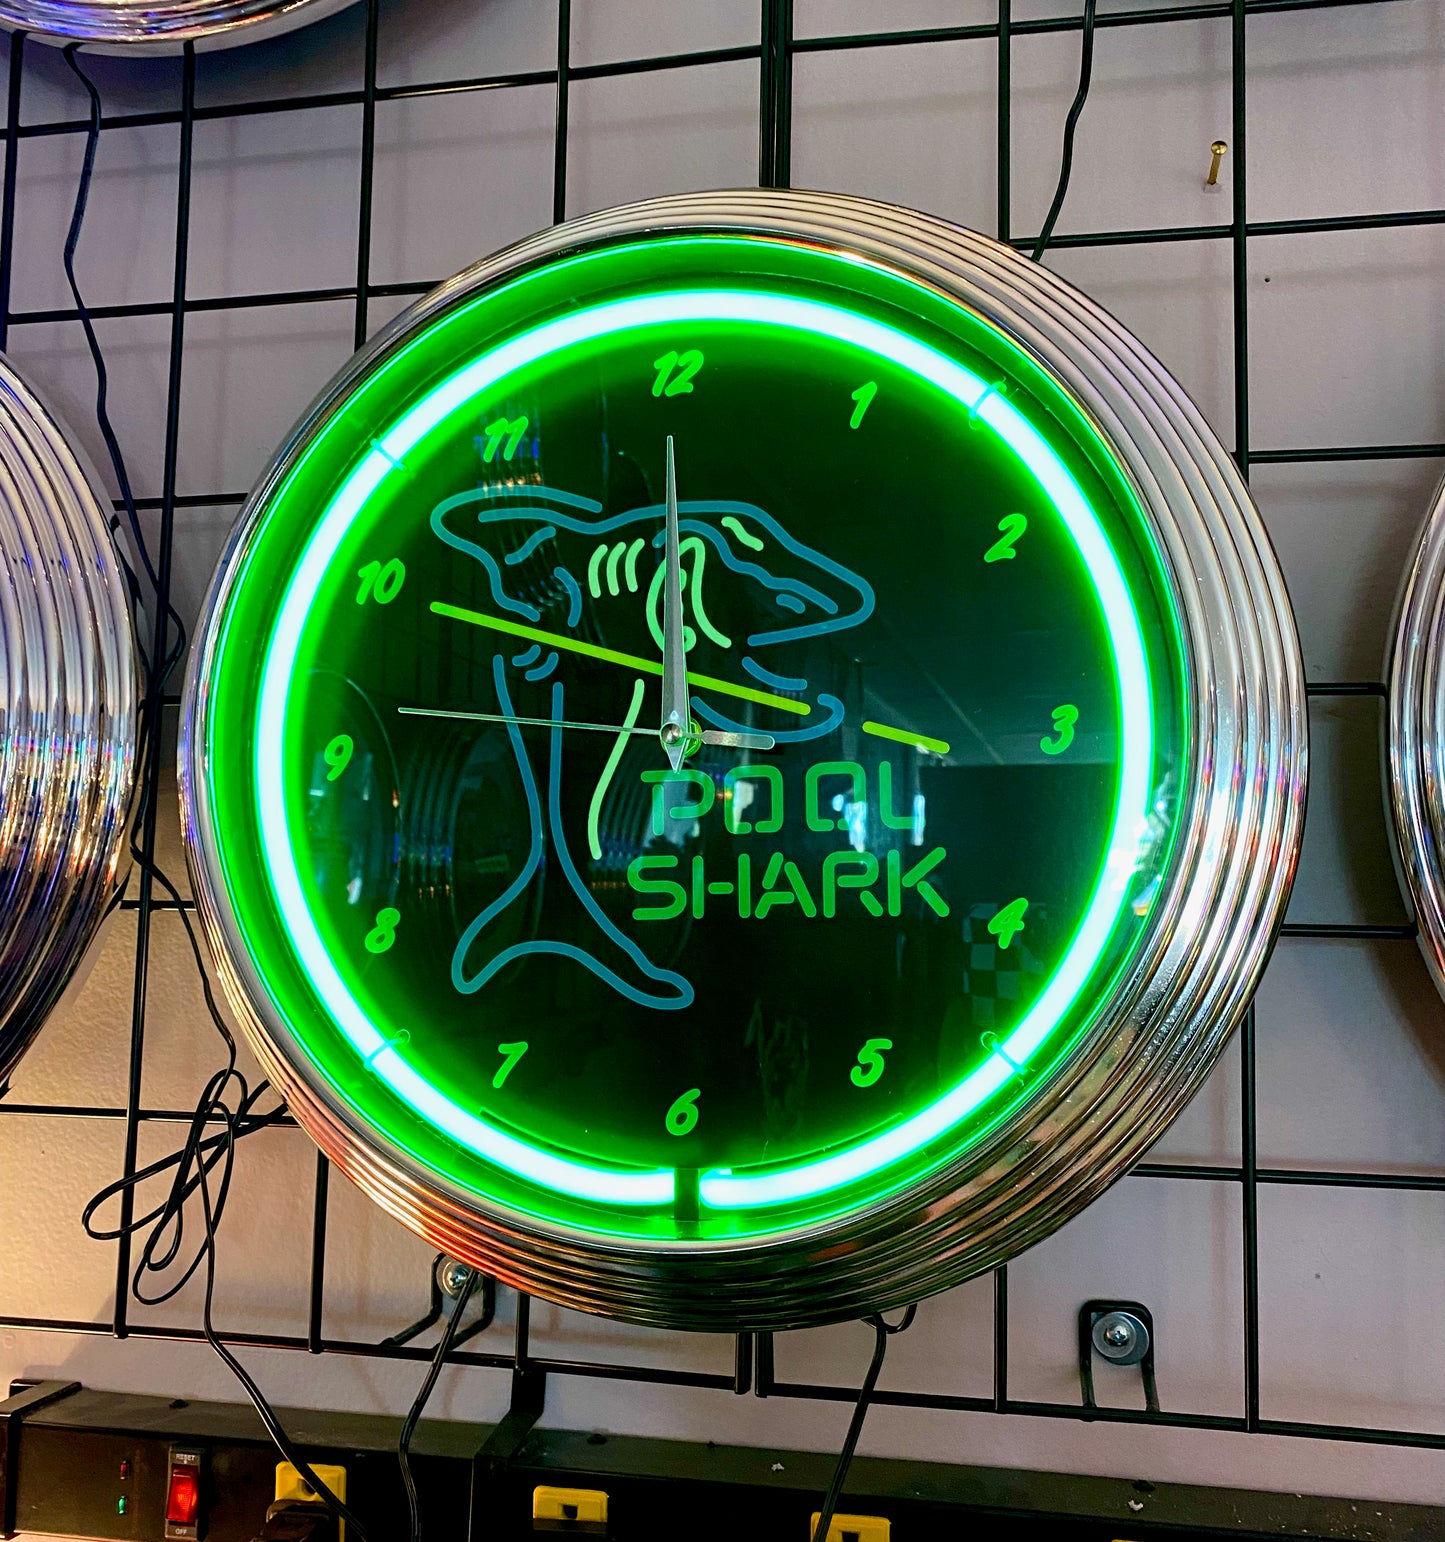 Pool Shark Neon Clock